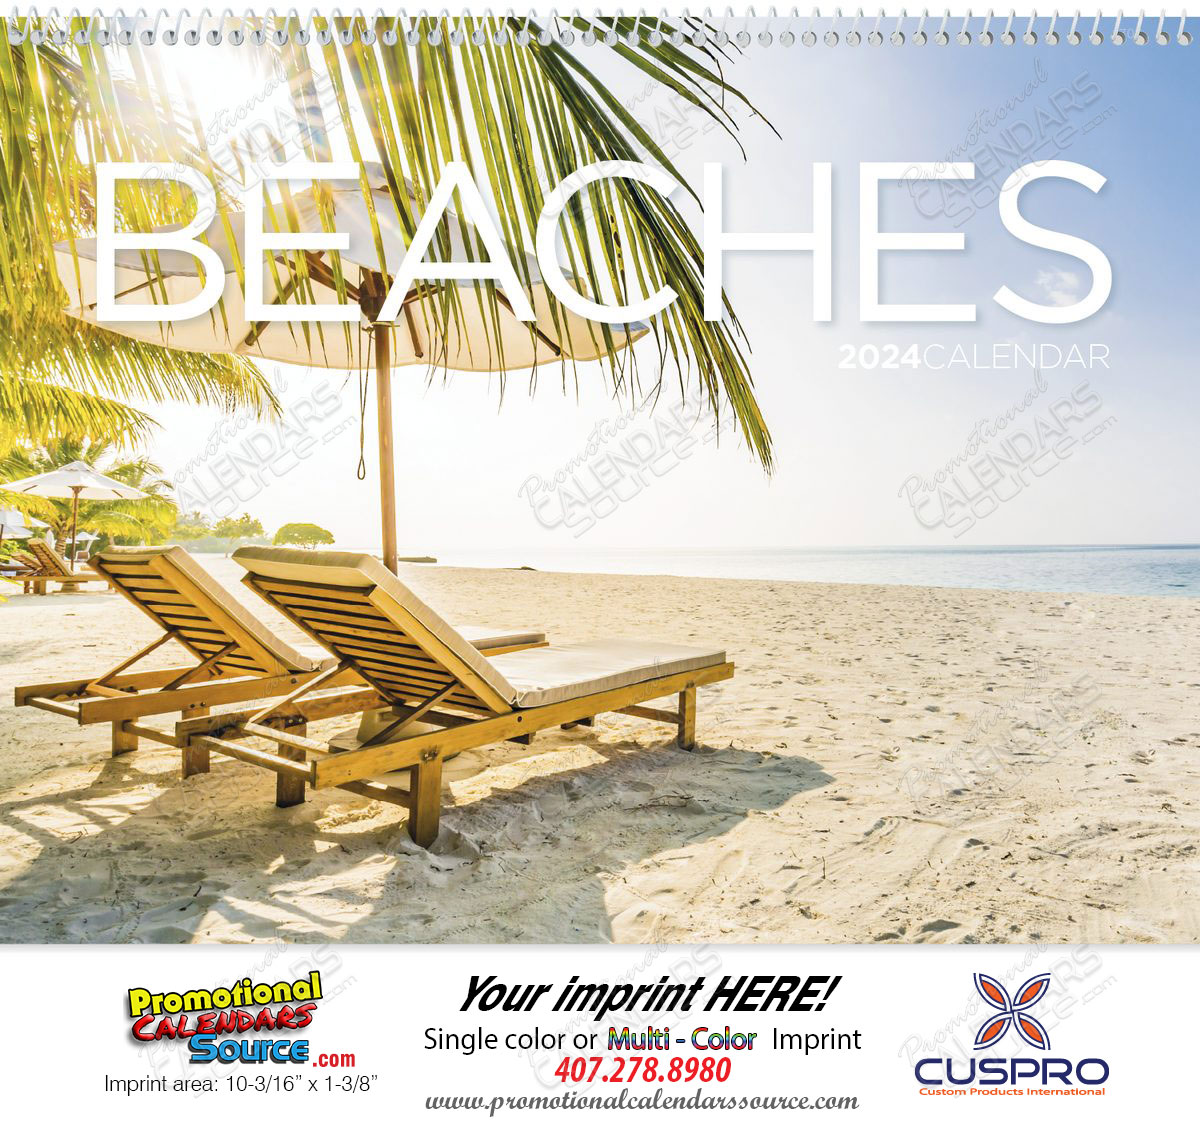 Scenic Beaches Promotional Calendar 